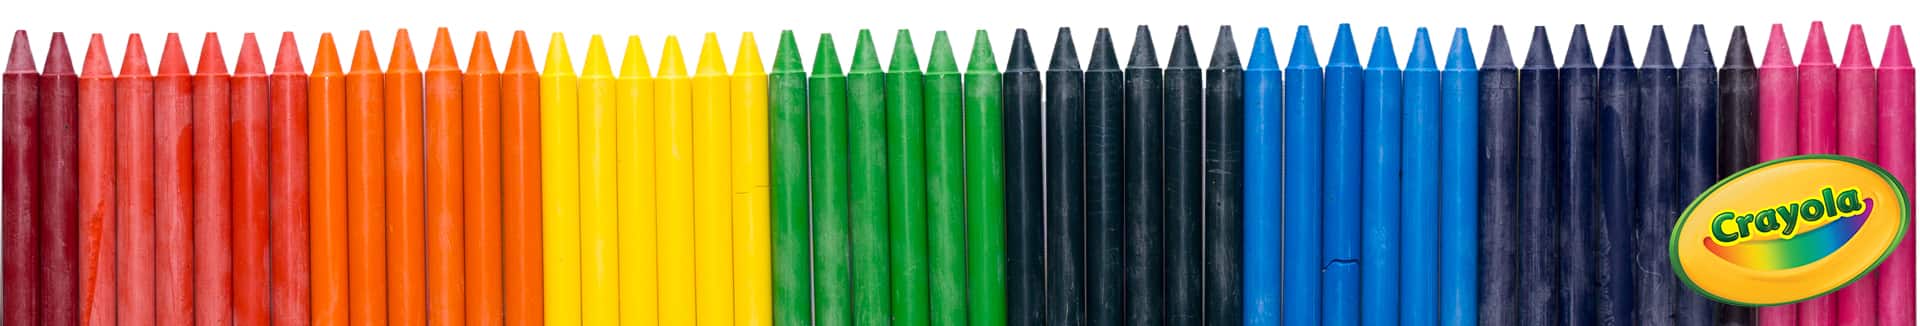 Crayola Crayon Pen : Utilise tes crayons de cire comme jamais auparavant !